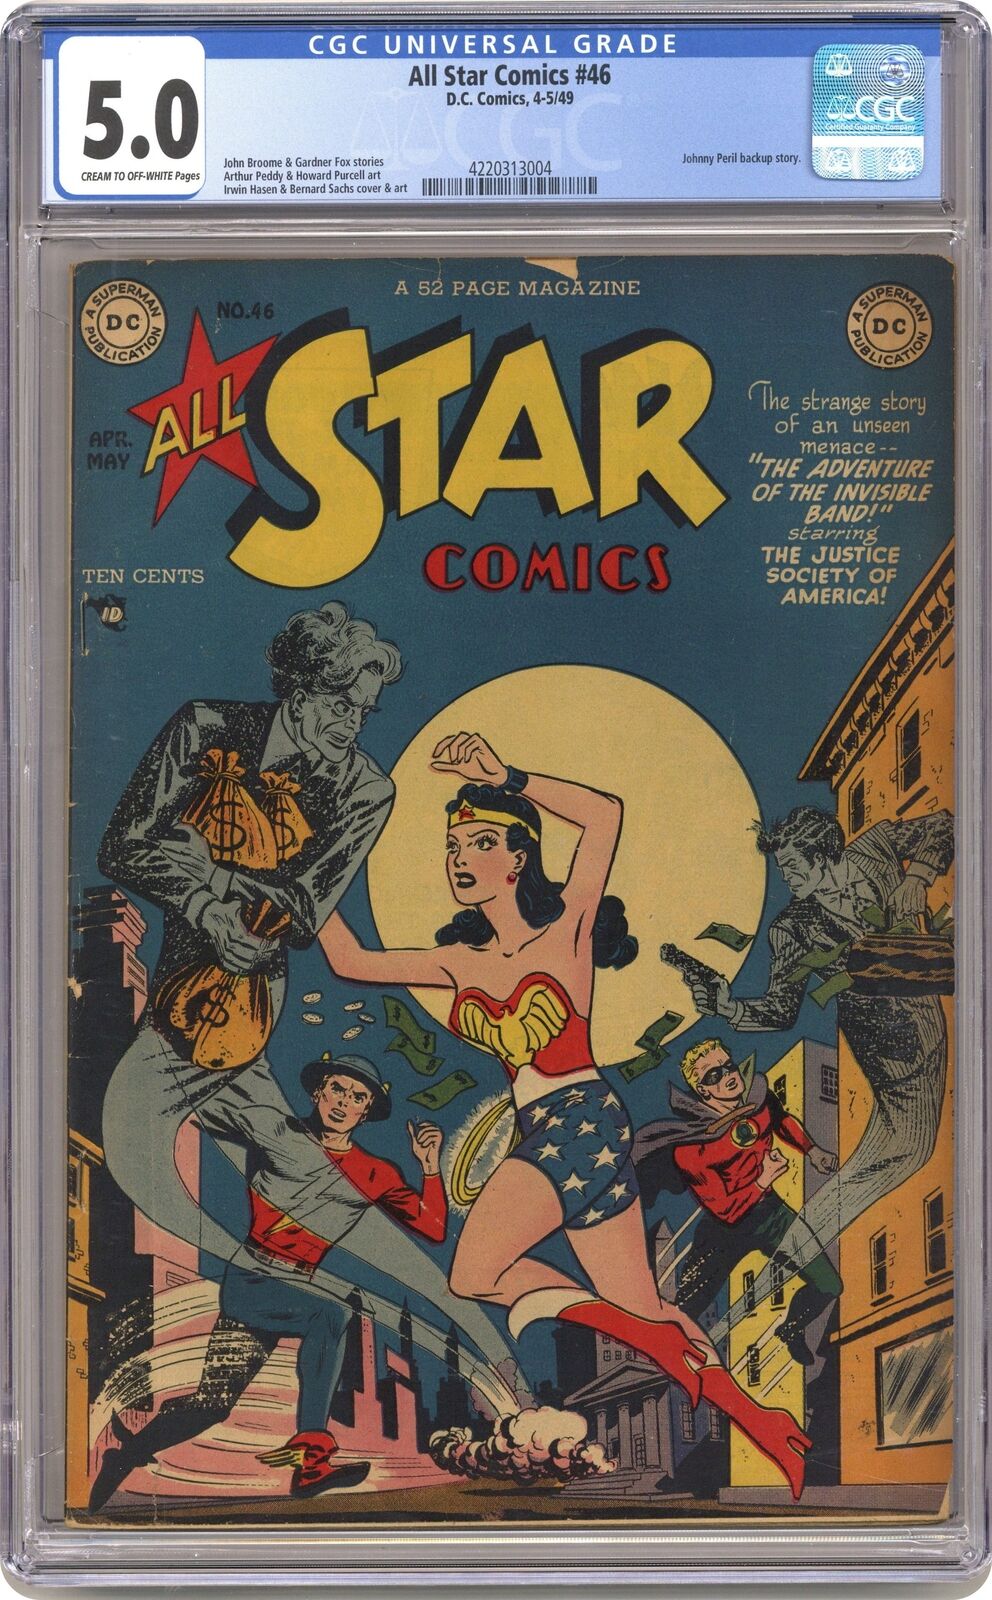 All Star Comics #46 CGC 5.0 1949 4220313004